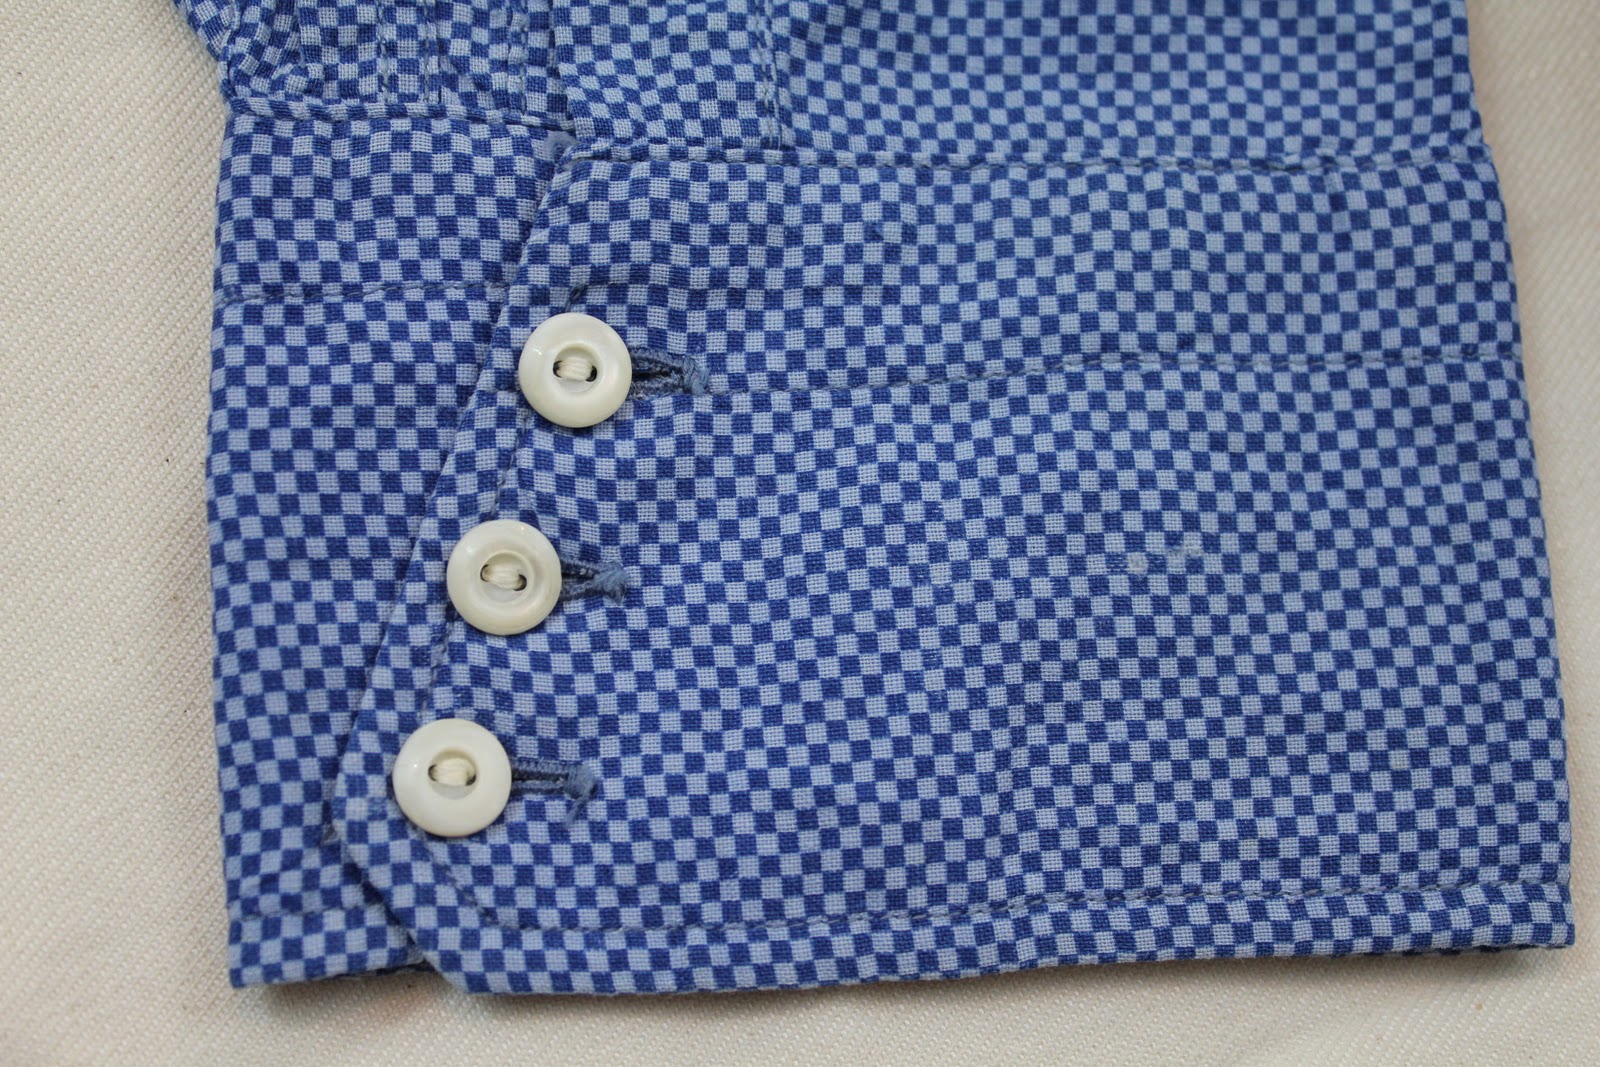 vintage workwear: 1940's BLUE TOP Broadcloth Work Shirt